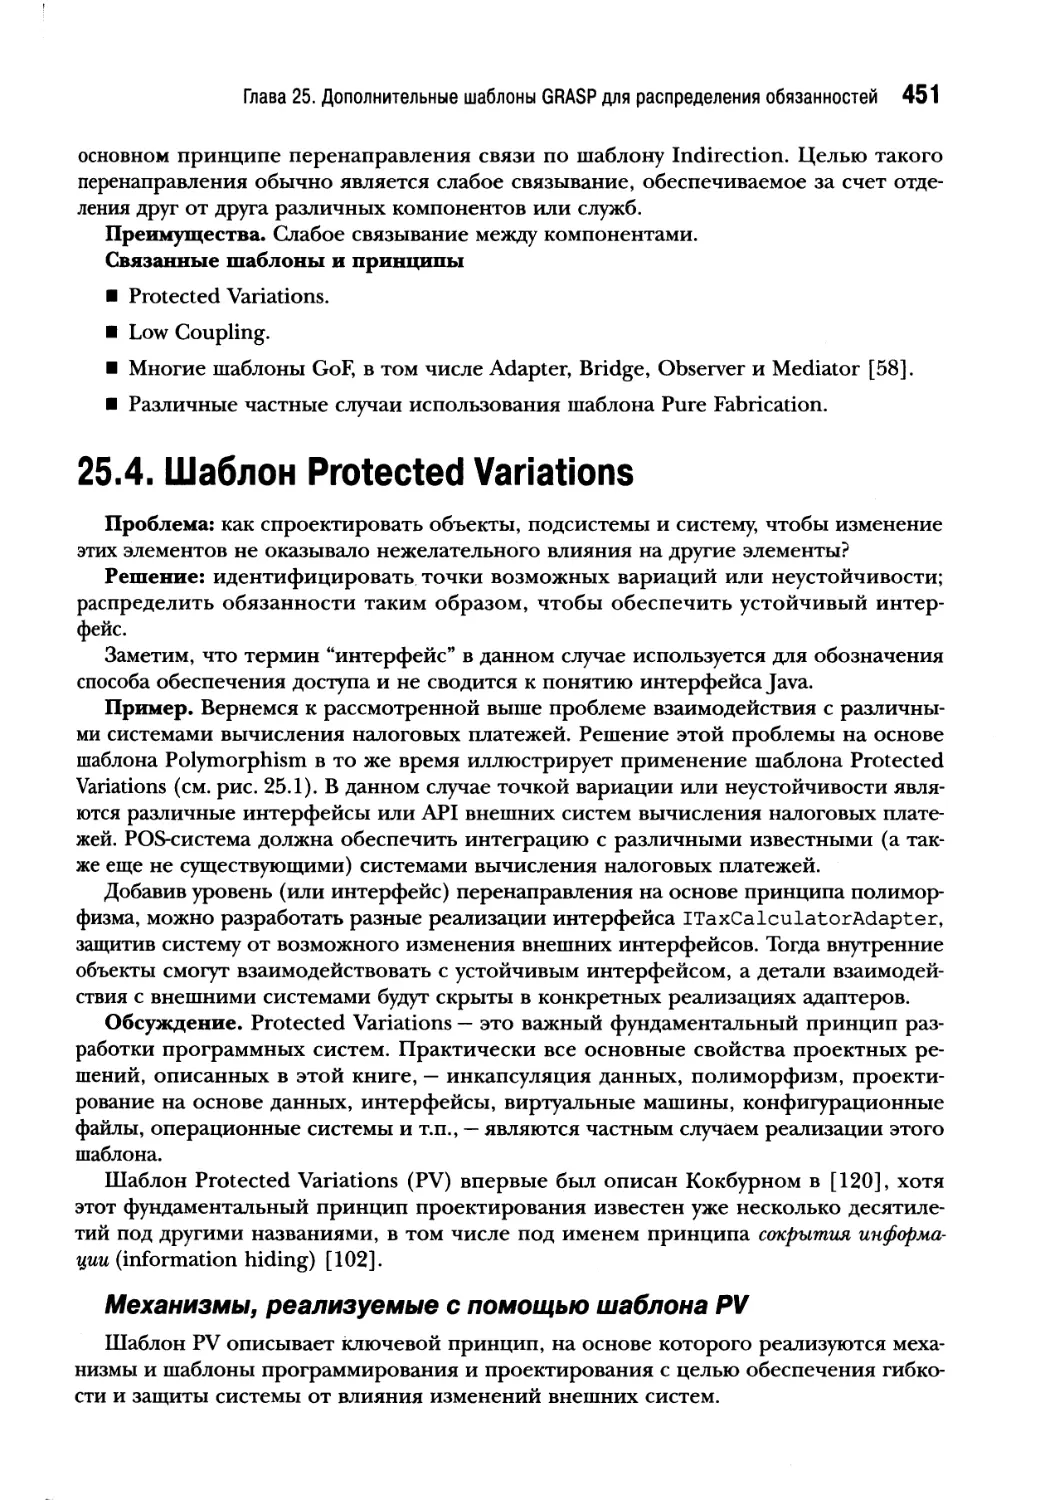 25.4. Шаблон Protected Variations